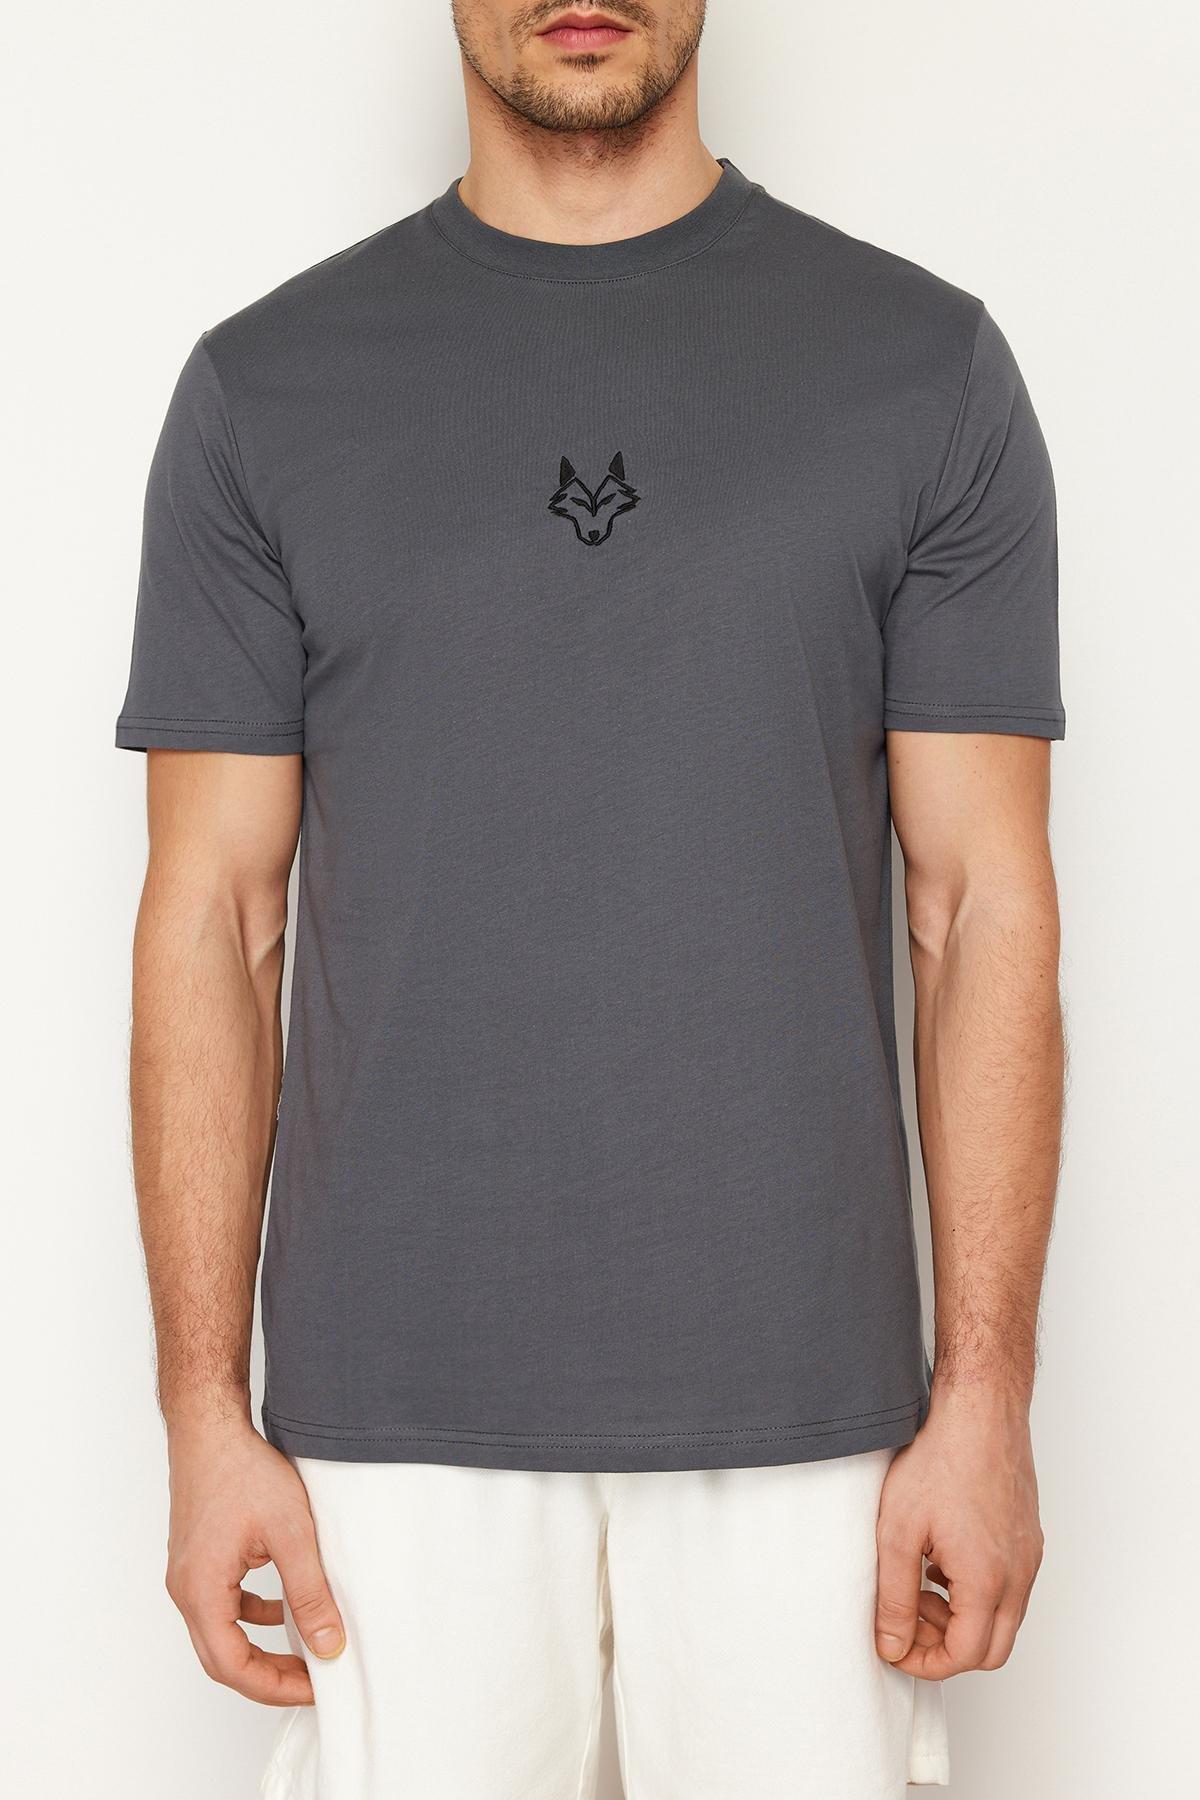 Trendyol - Grey Short Sleeve Embroidered T-Shirt